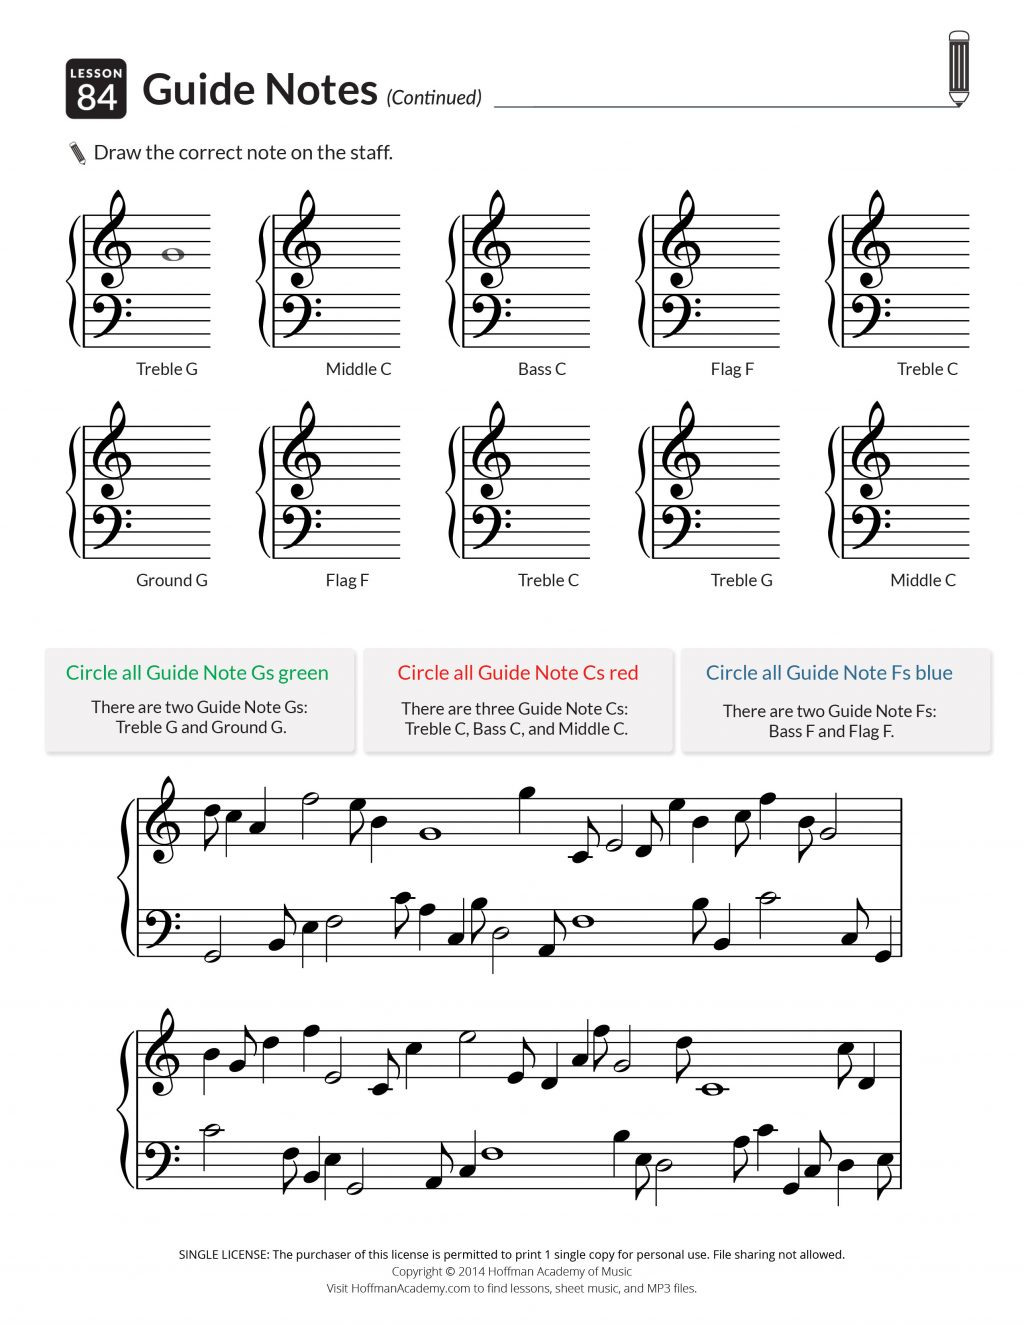 beginner-piano-worksheets-db-excel